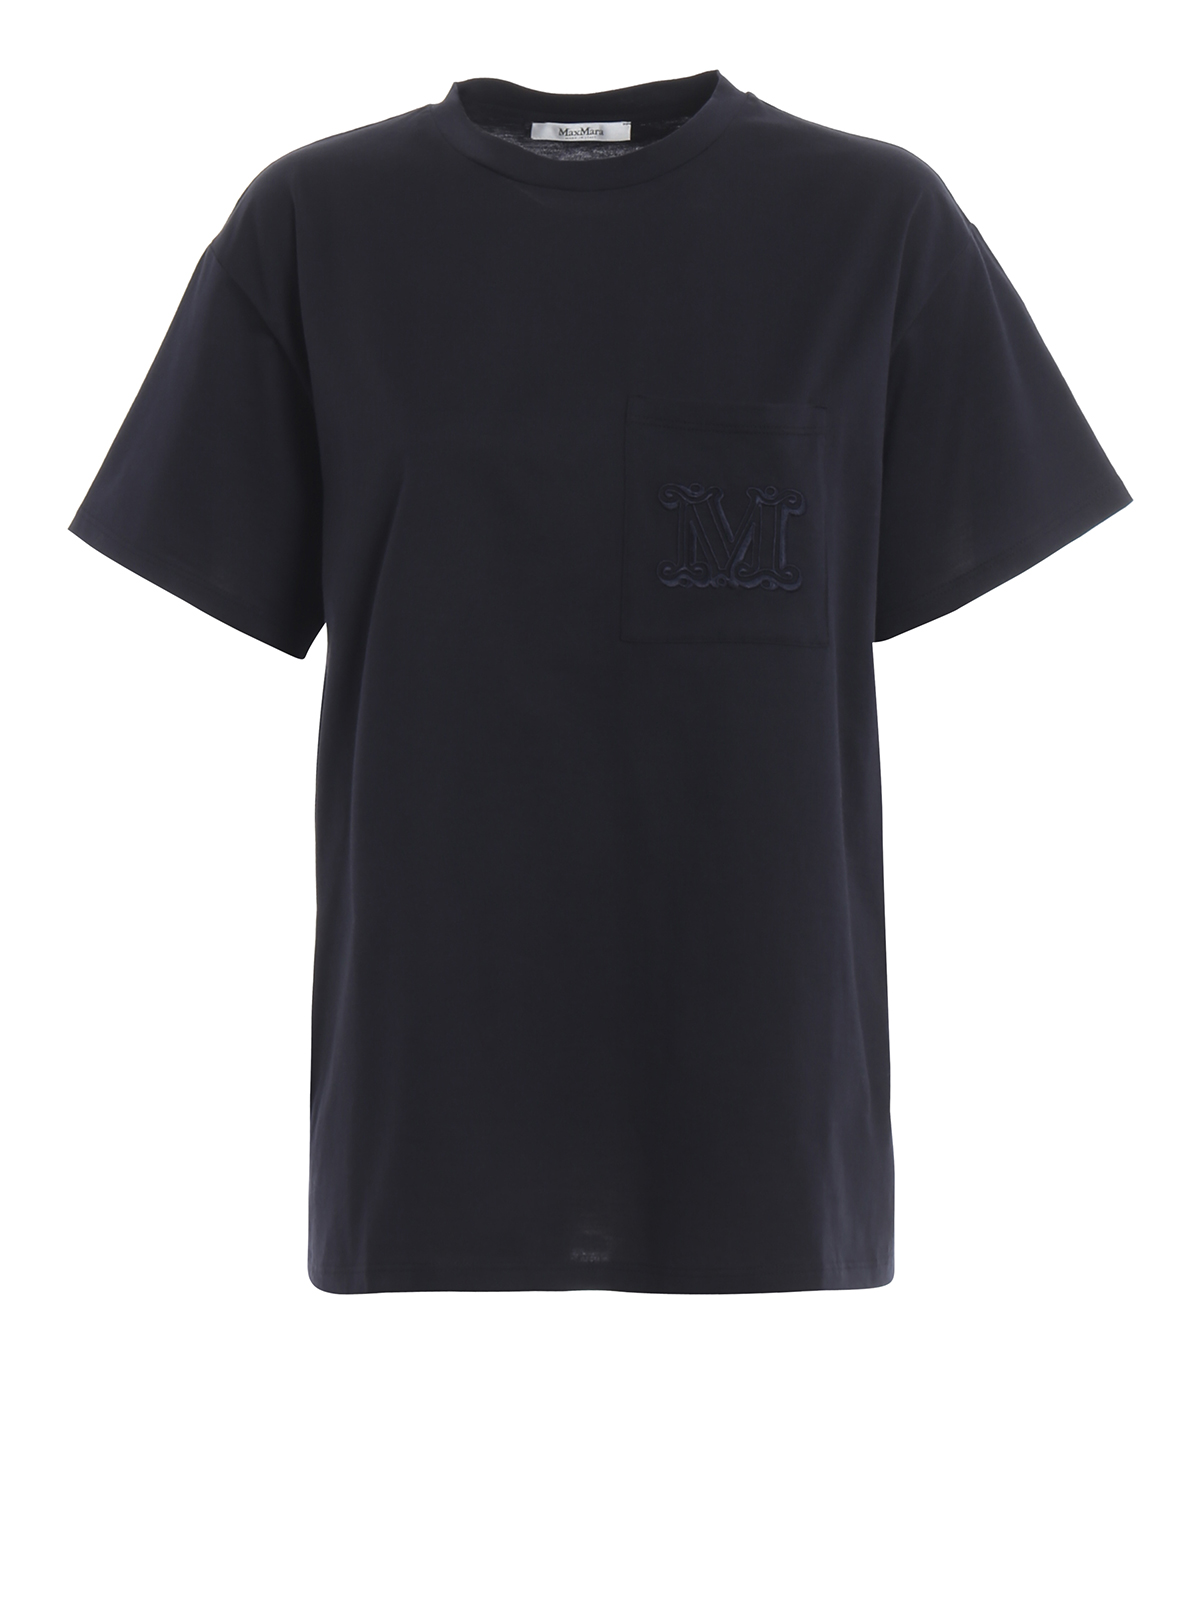 T-shirts Max Mara - Cabaret blue cotton jersey T-shirt - 194102926003